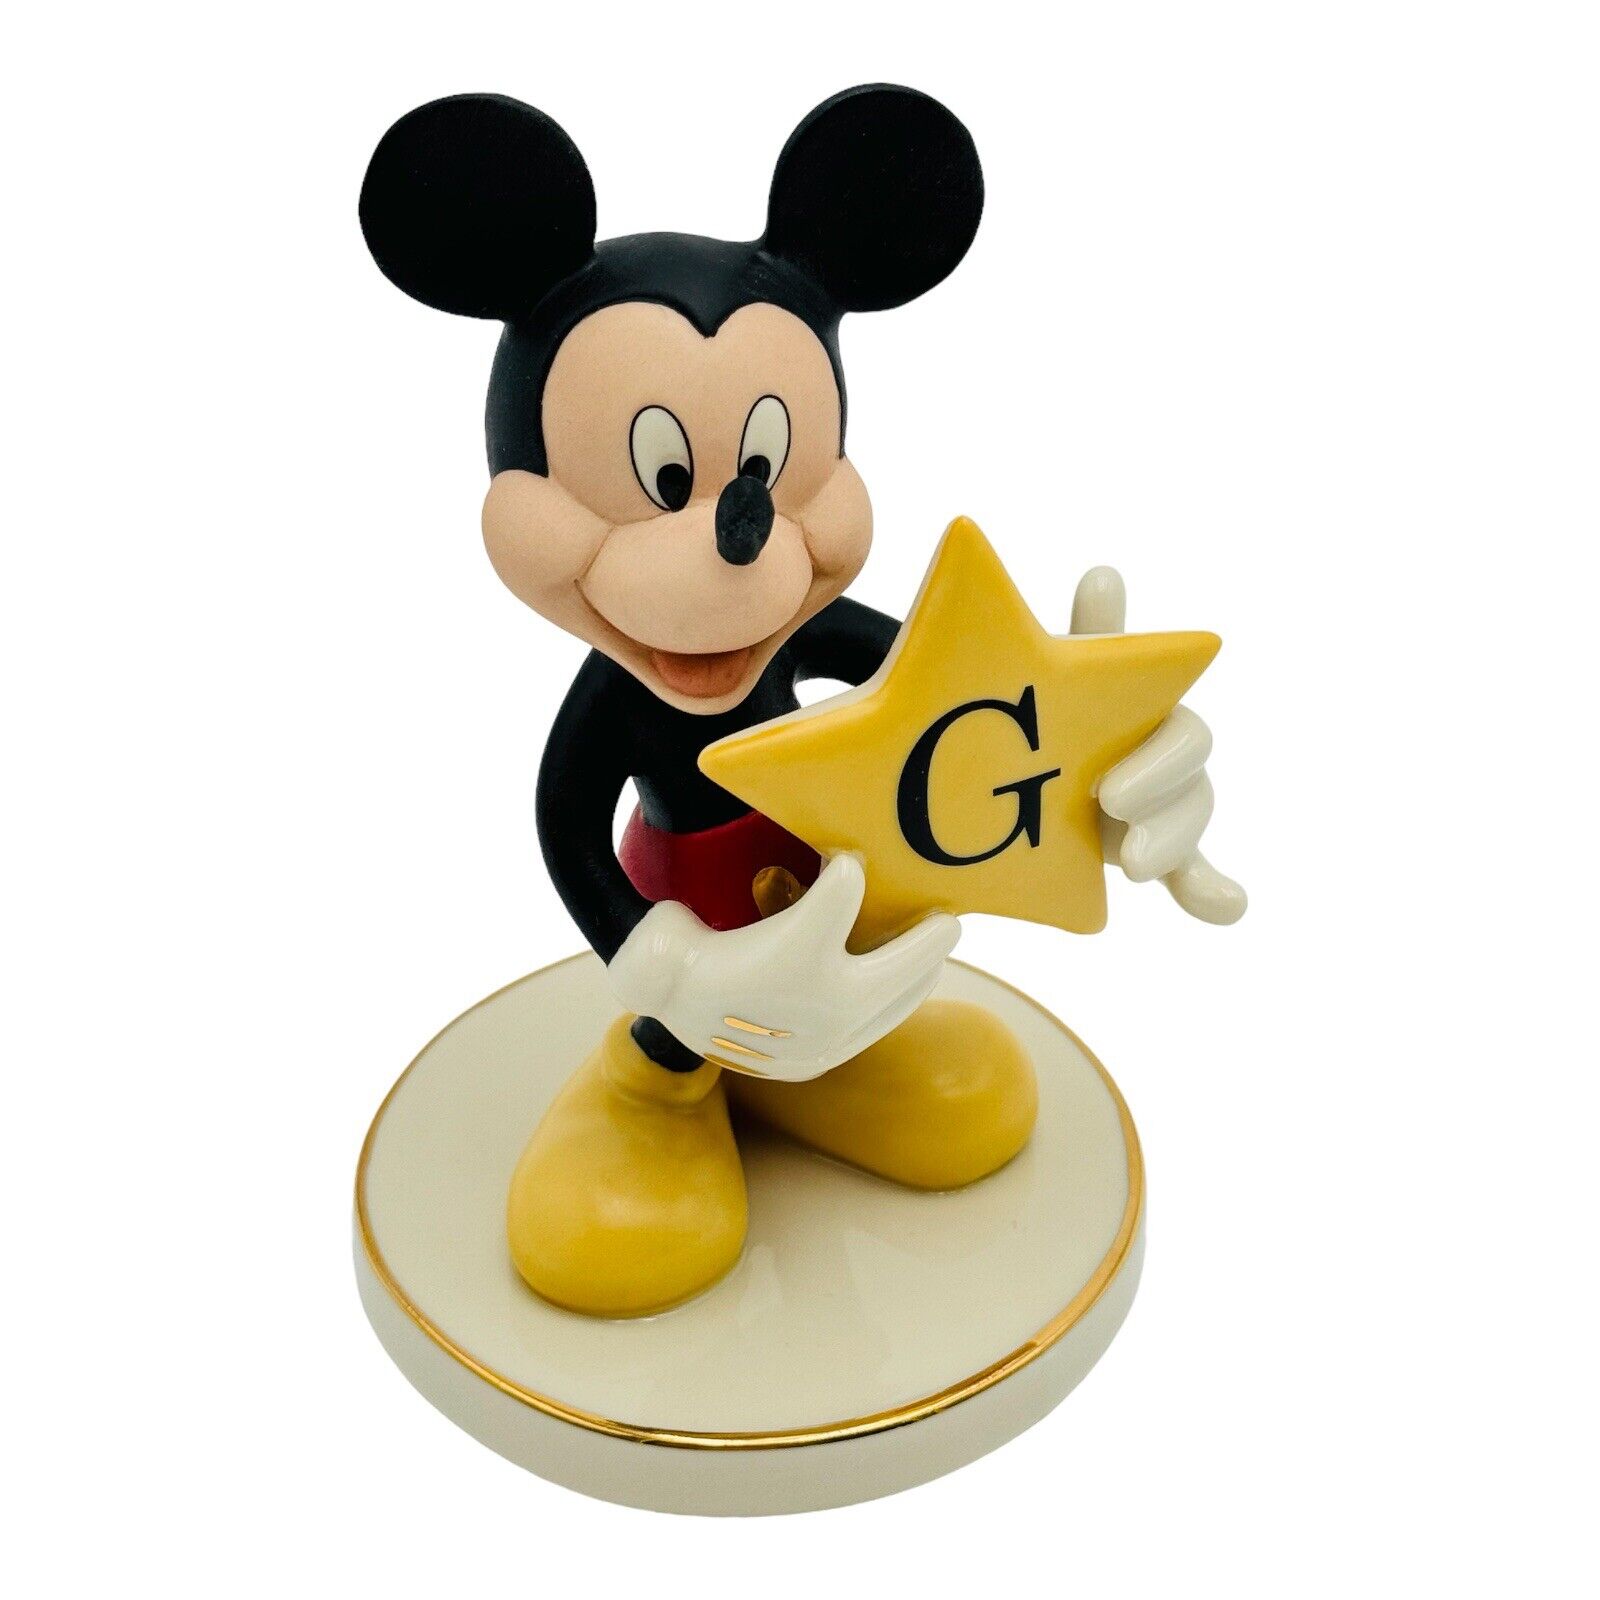 Lenox Disney You’re A Shining Star, Mickey Mouse Figurine W/ “G” Monogram